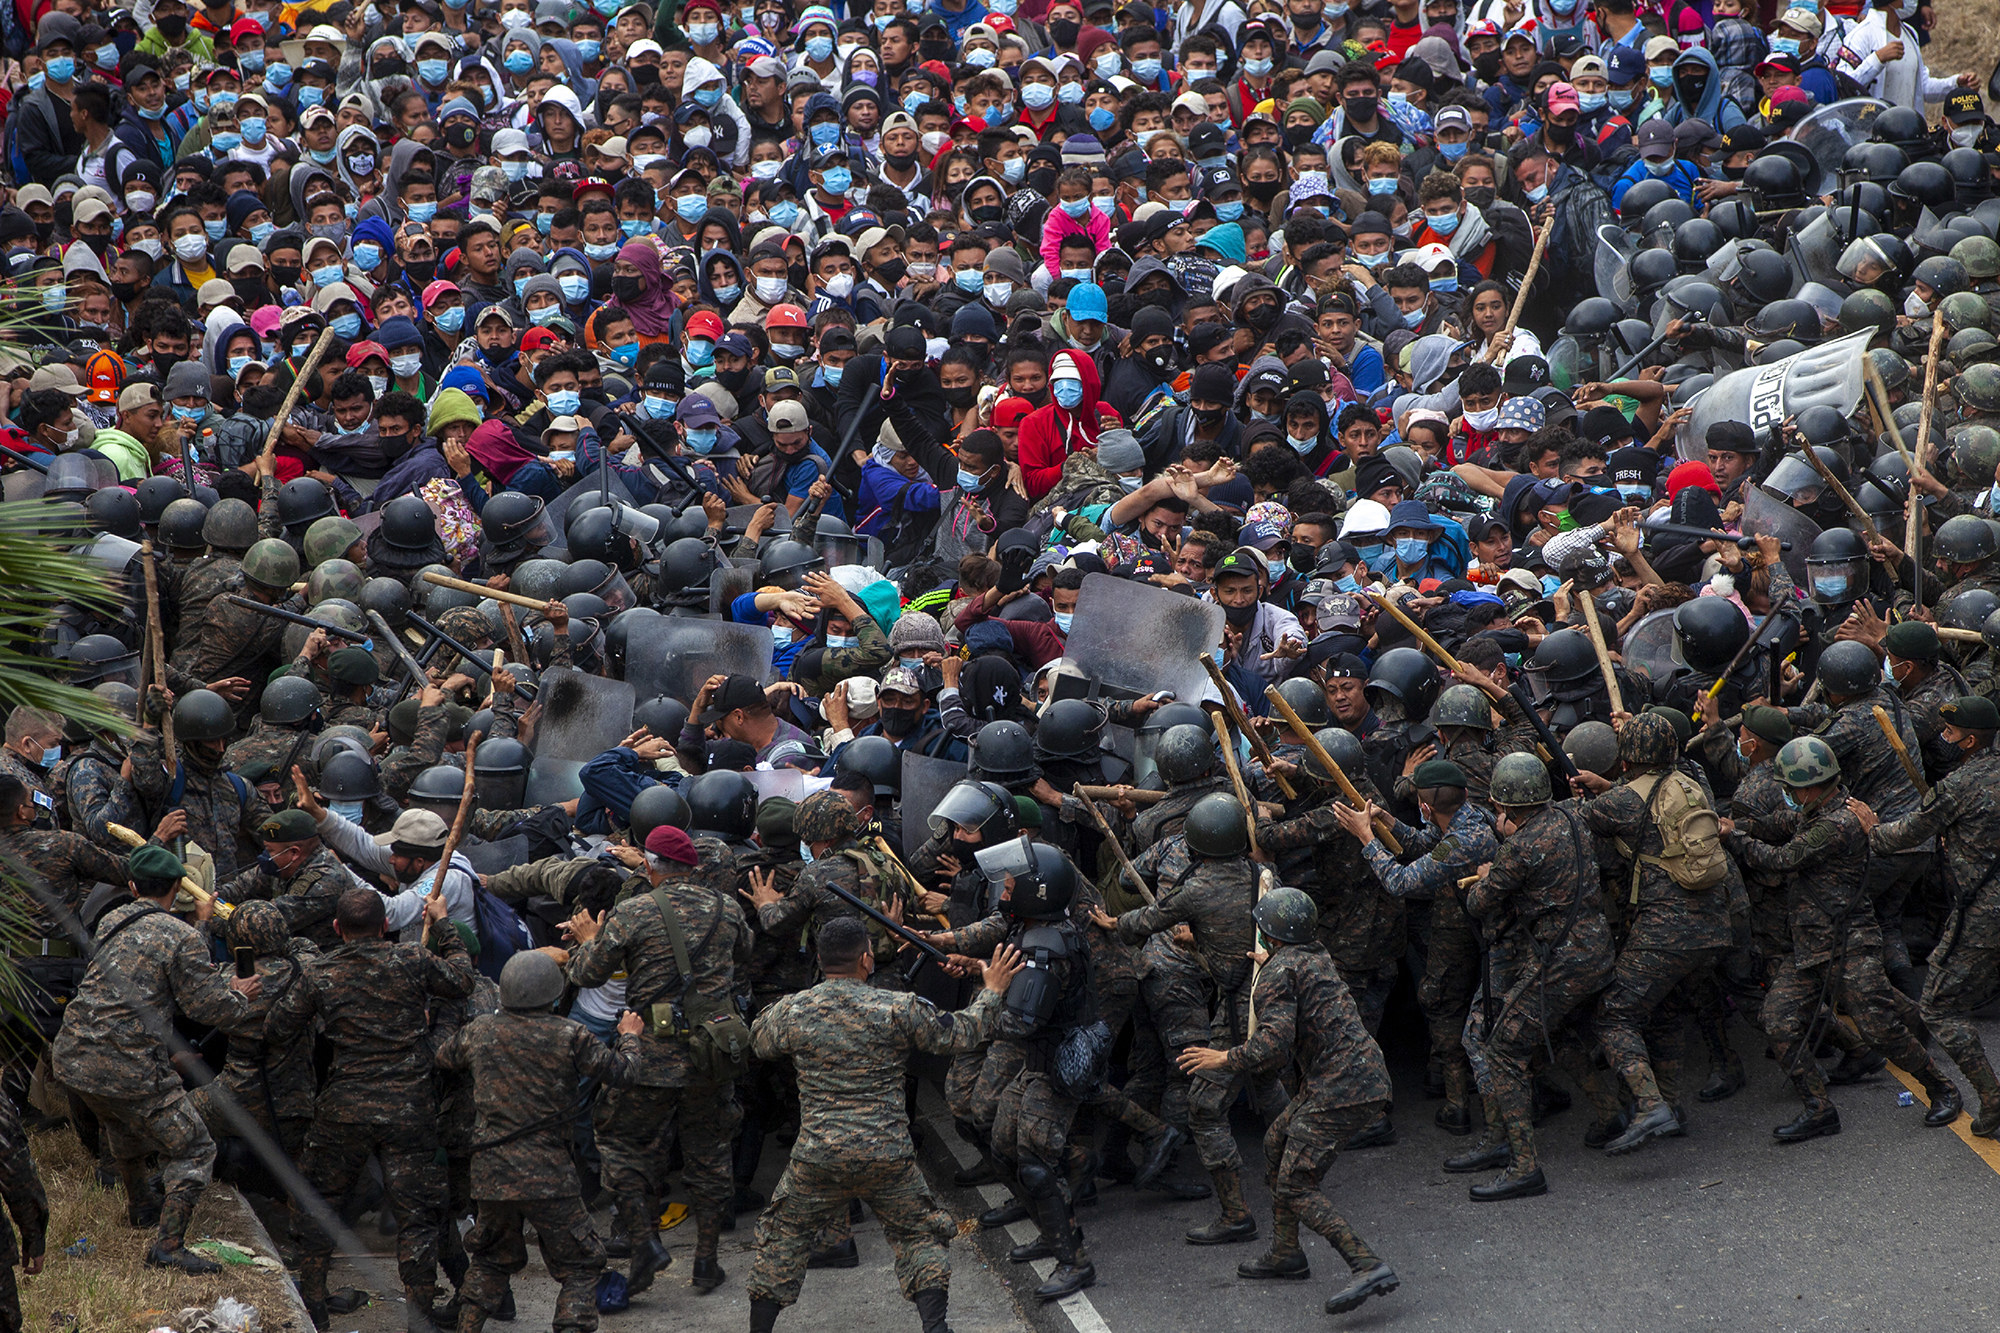 A huge crowd of people is held back by soldiers in riot gear wielding batons